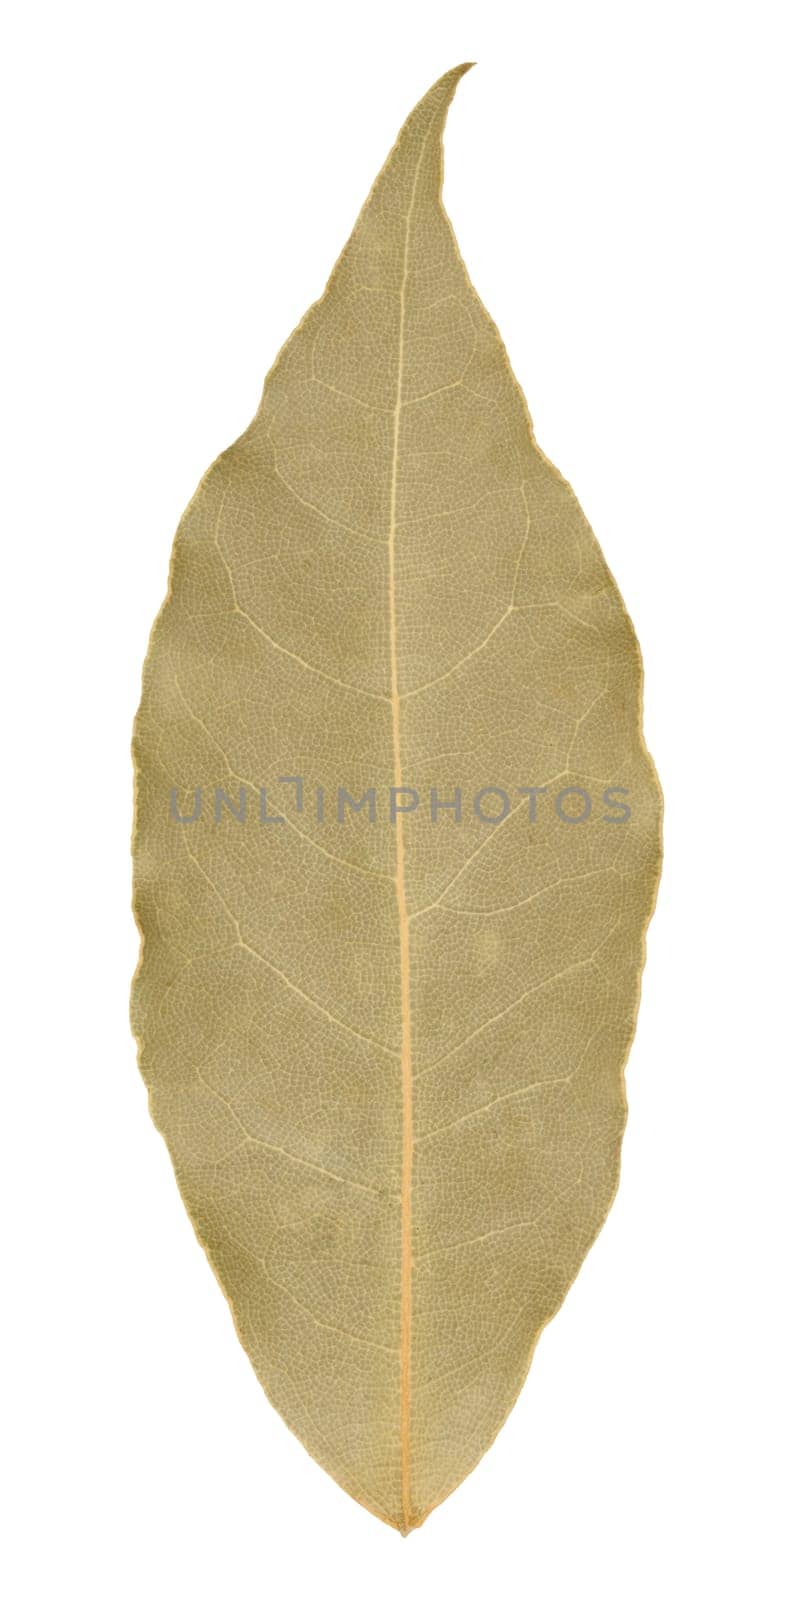 Dry bay leaf leaf on isolated background by ndanko